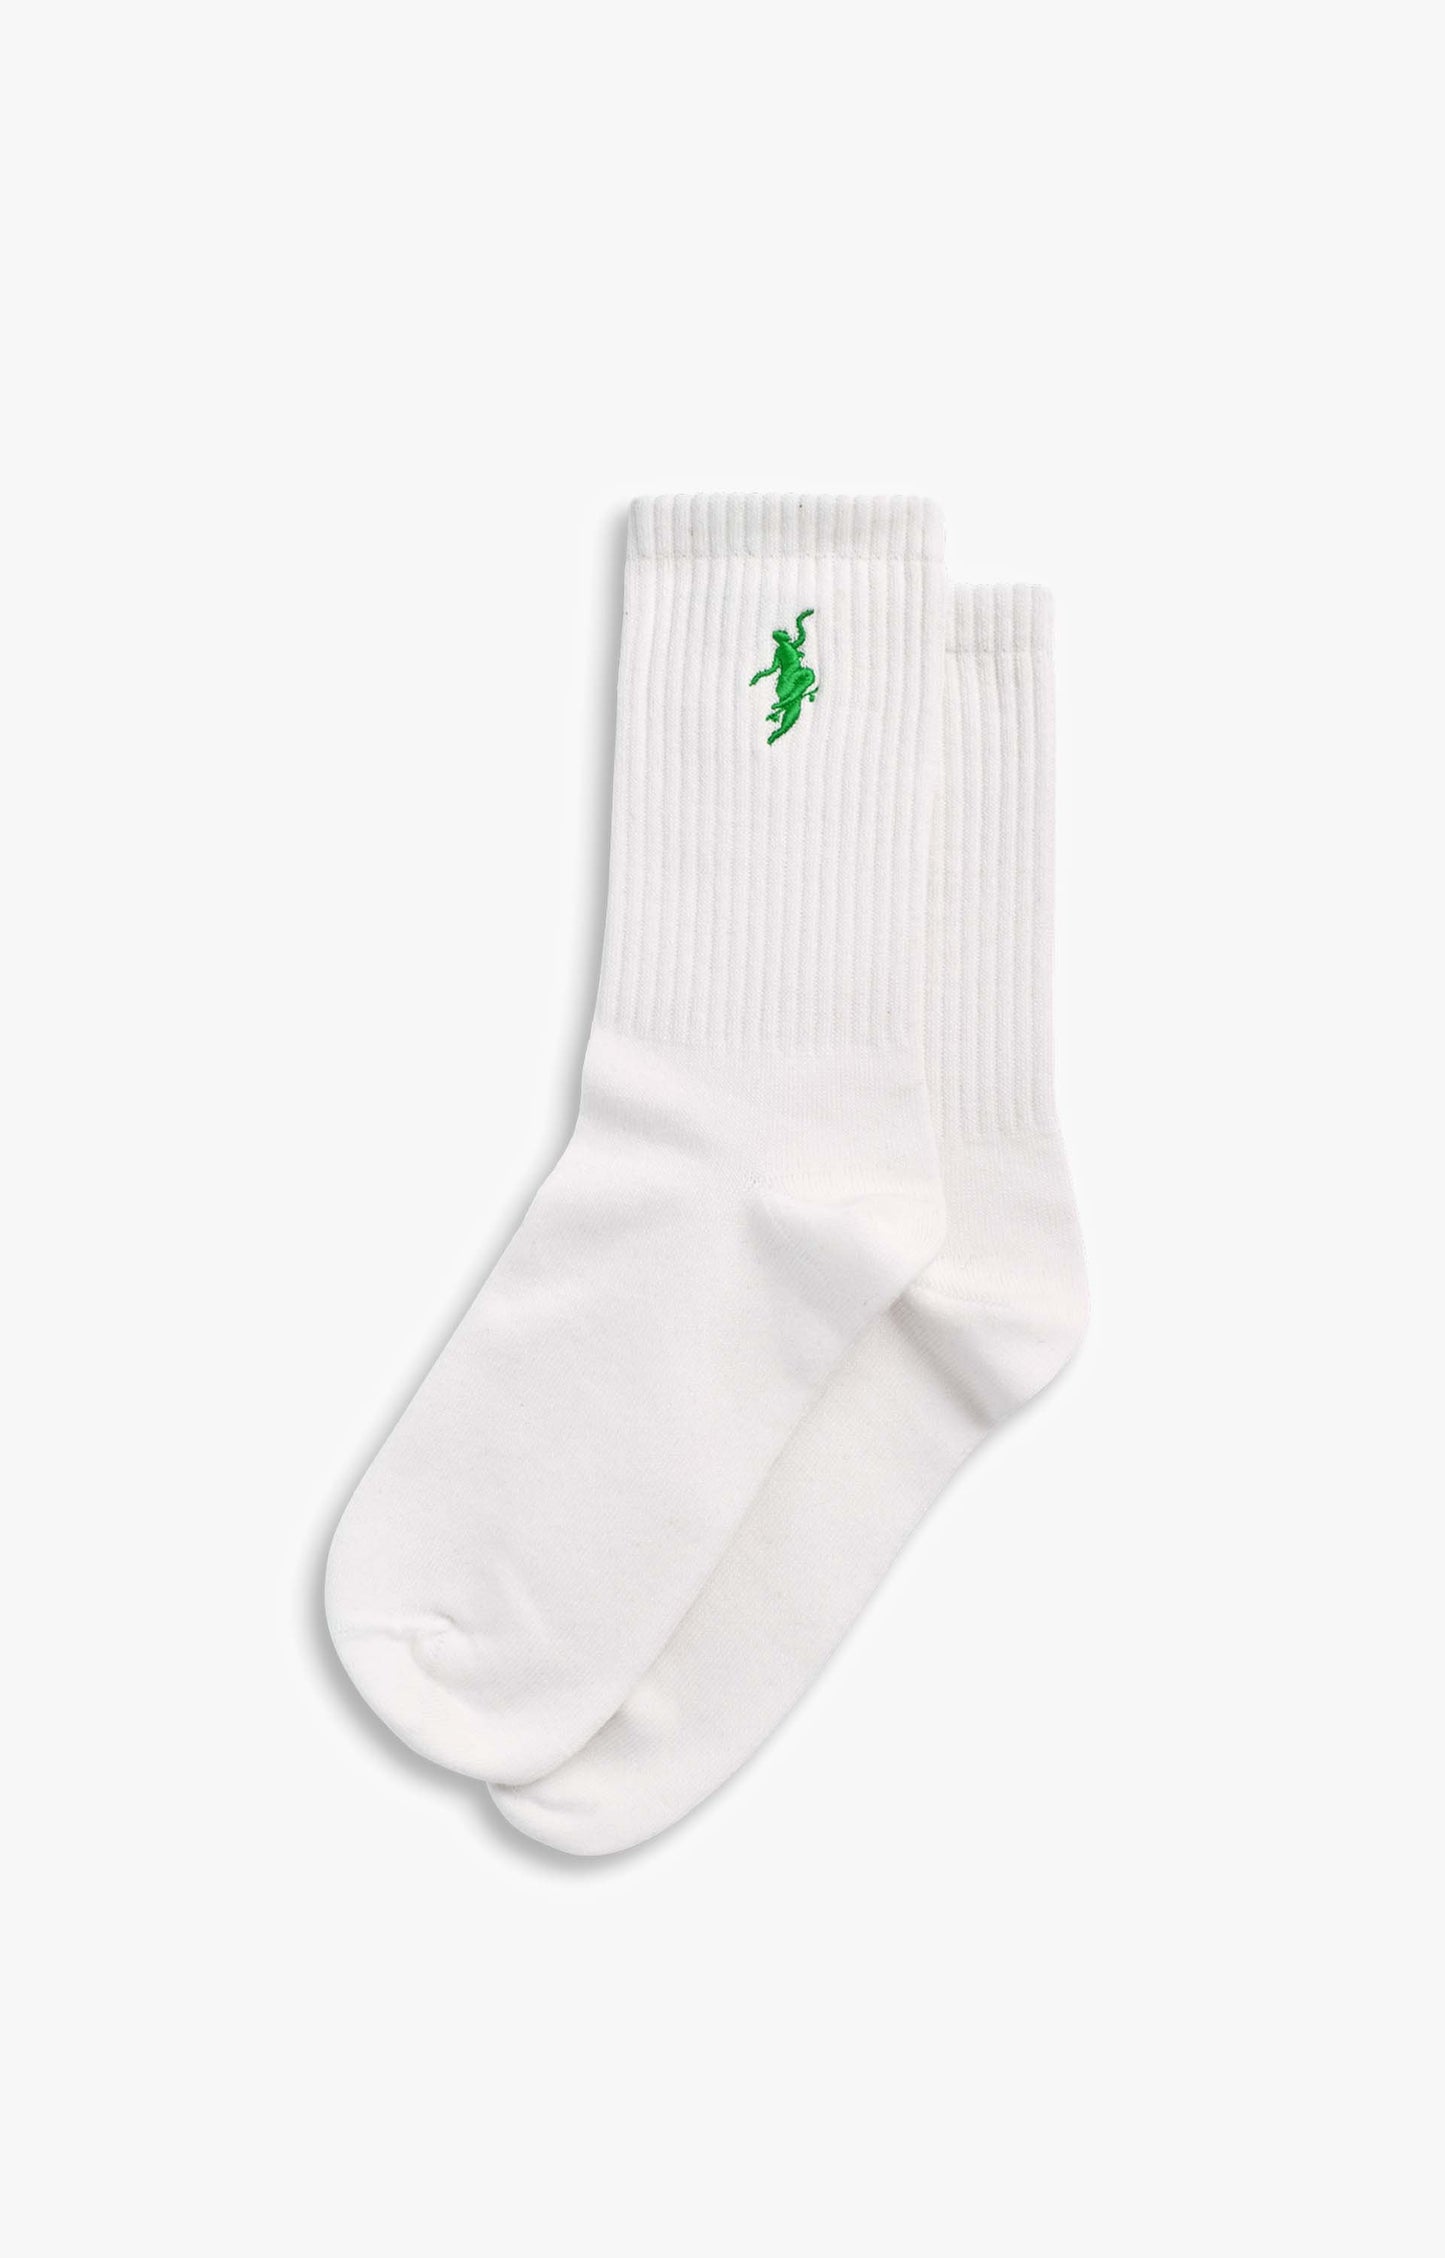 Polar Skate Co No Comply Socks, White/Green